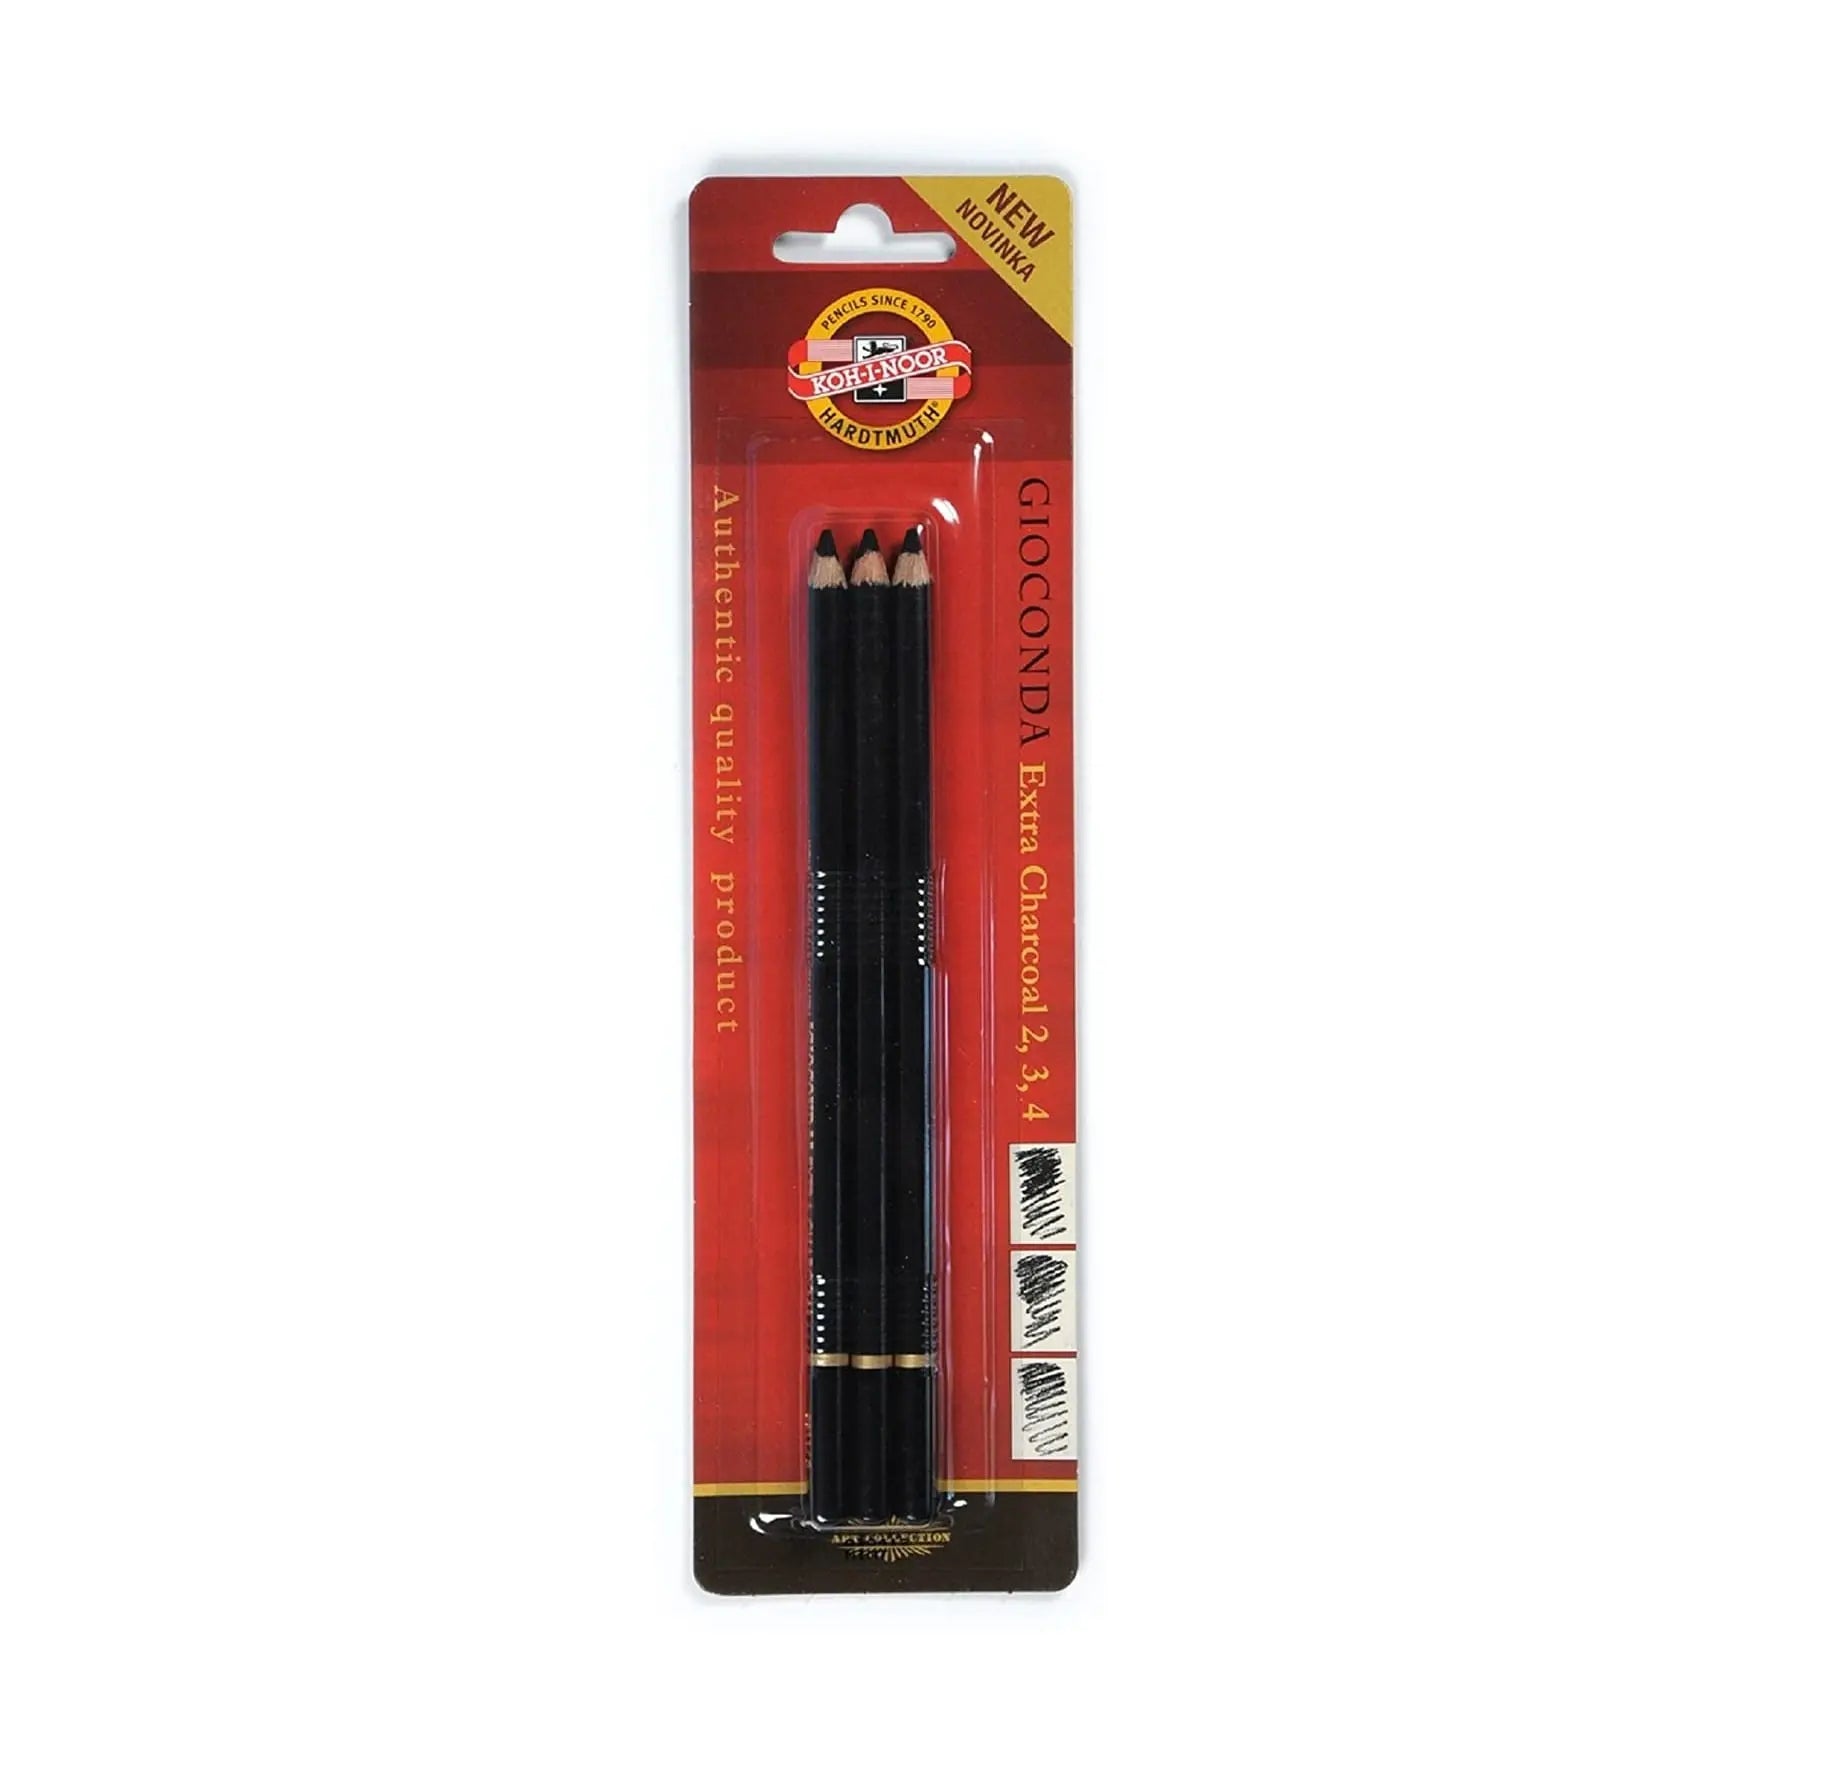 Kohinoor Hardtmuth Gradational Pencils Set - Gioconda Extra Charcoal Pencils Set 2, 3, 4 - 8811-3Pcs Kohinoor